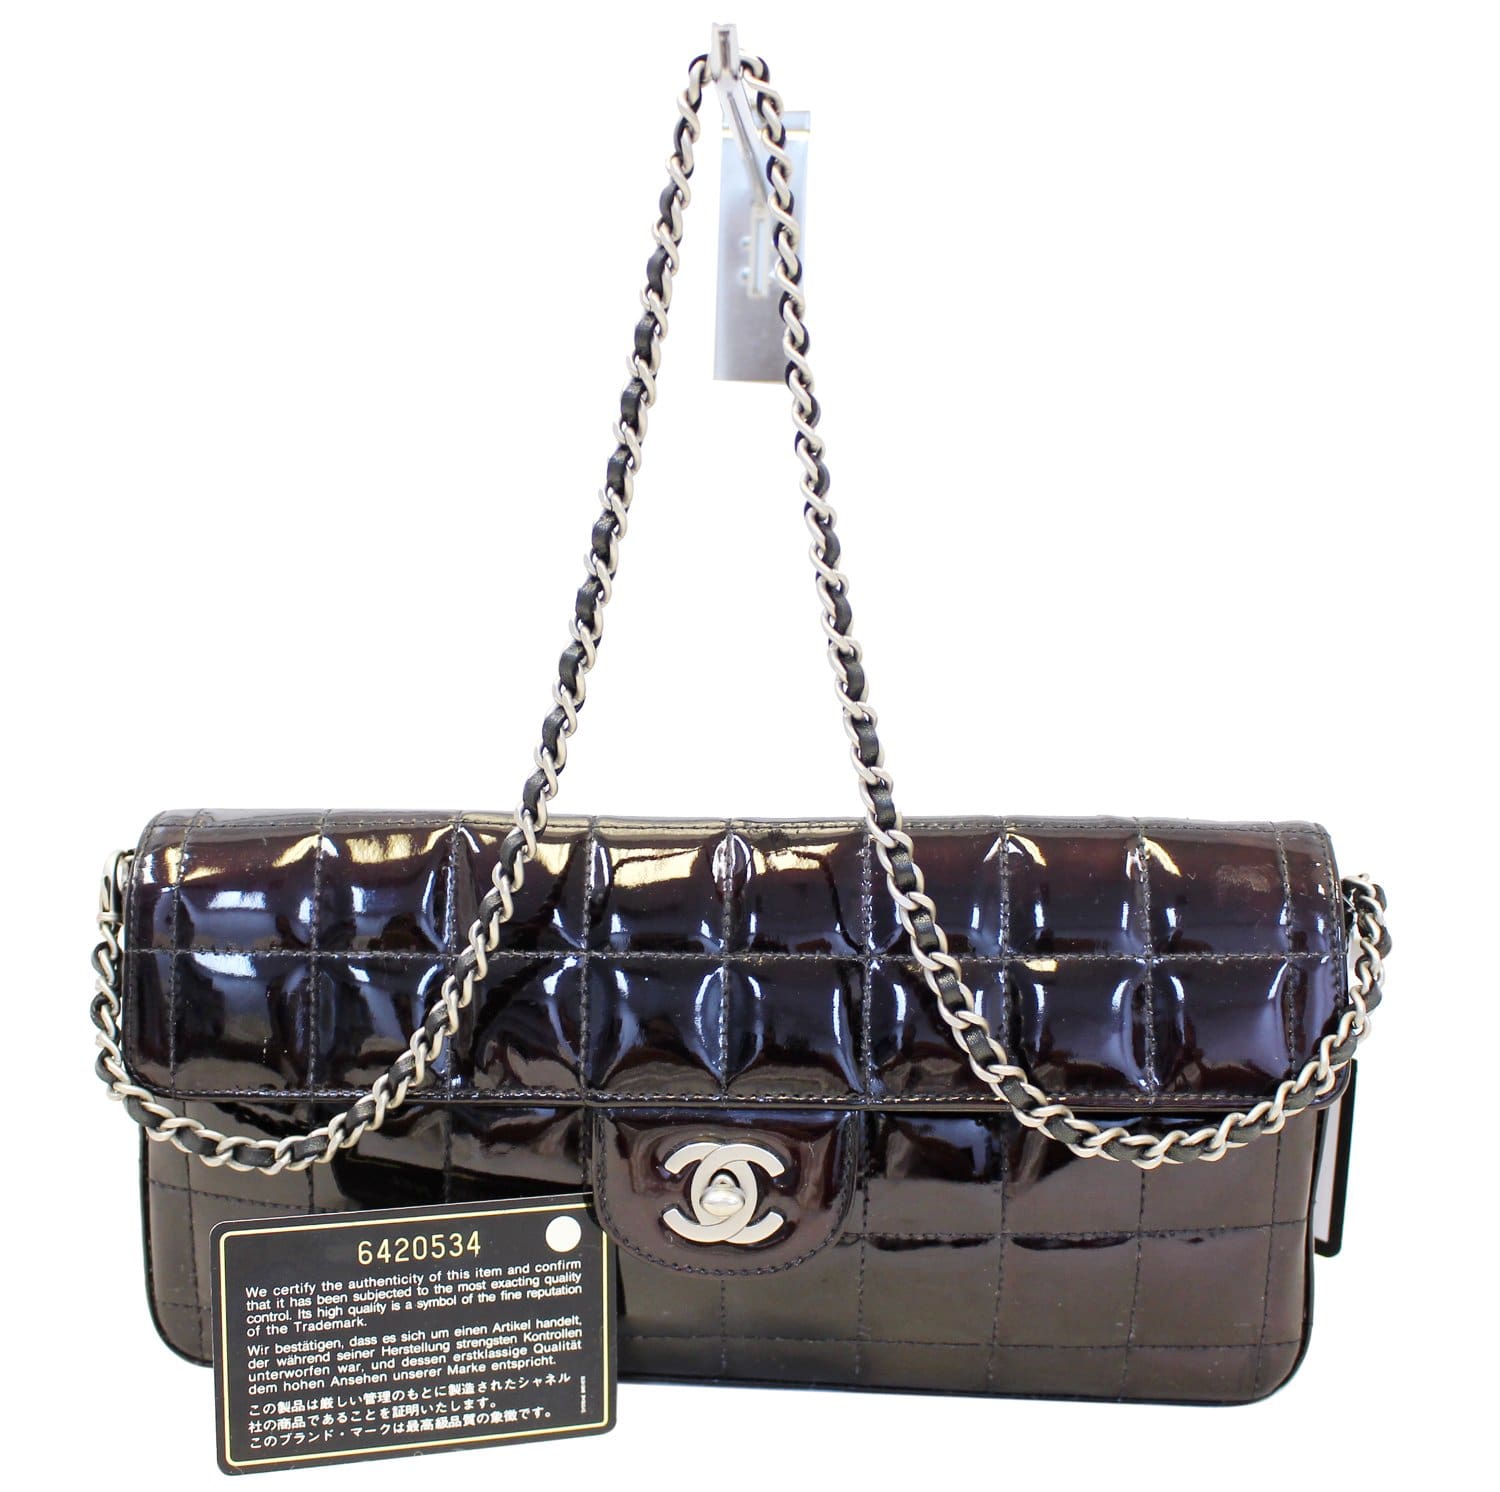 CELINE 3600$ Quilted Leather Chain Shoulder Bag - Matelasse Monochrome Logo